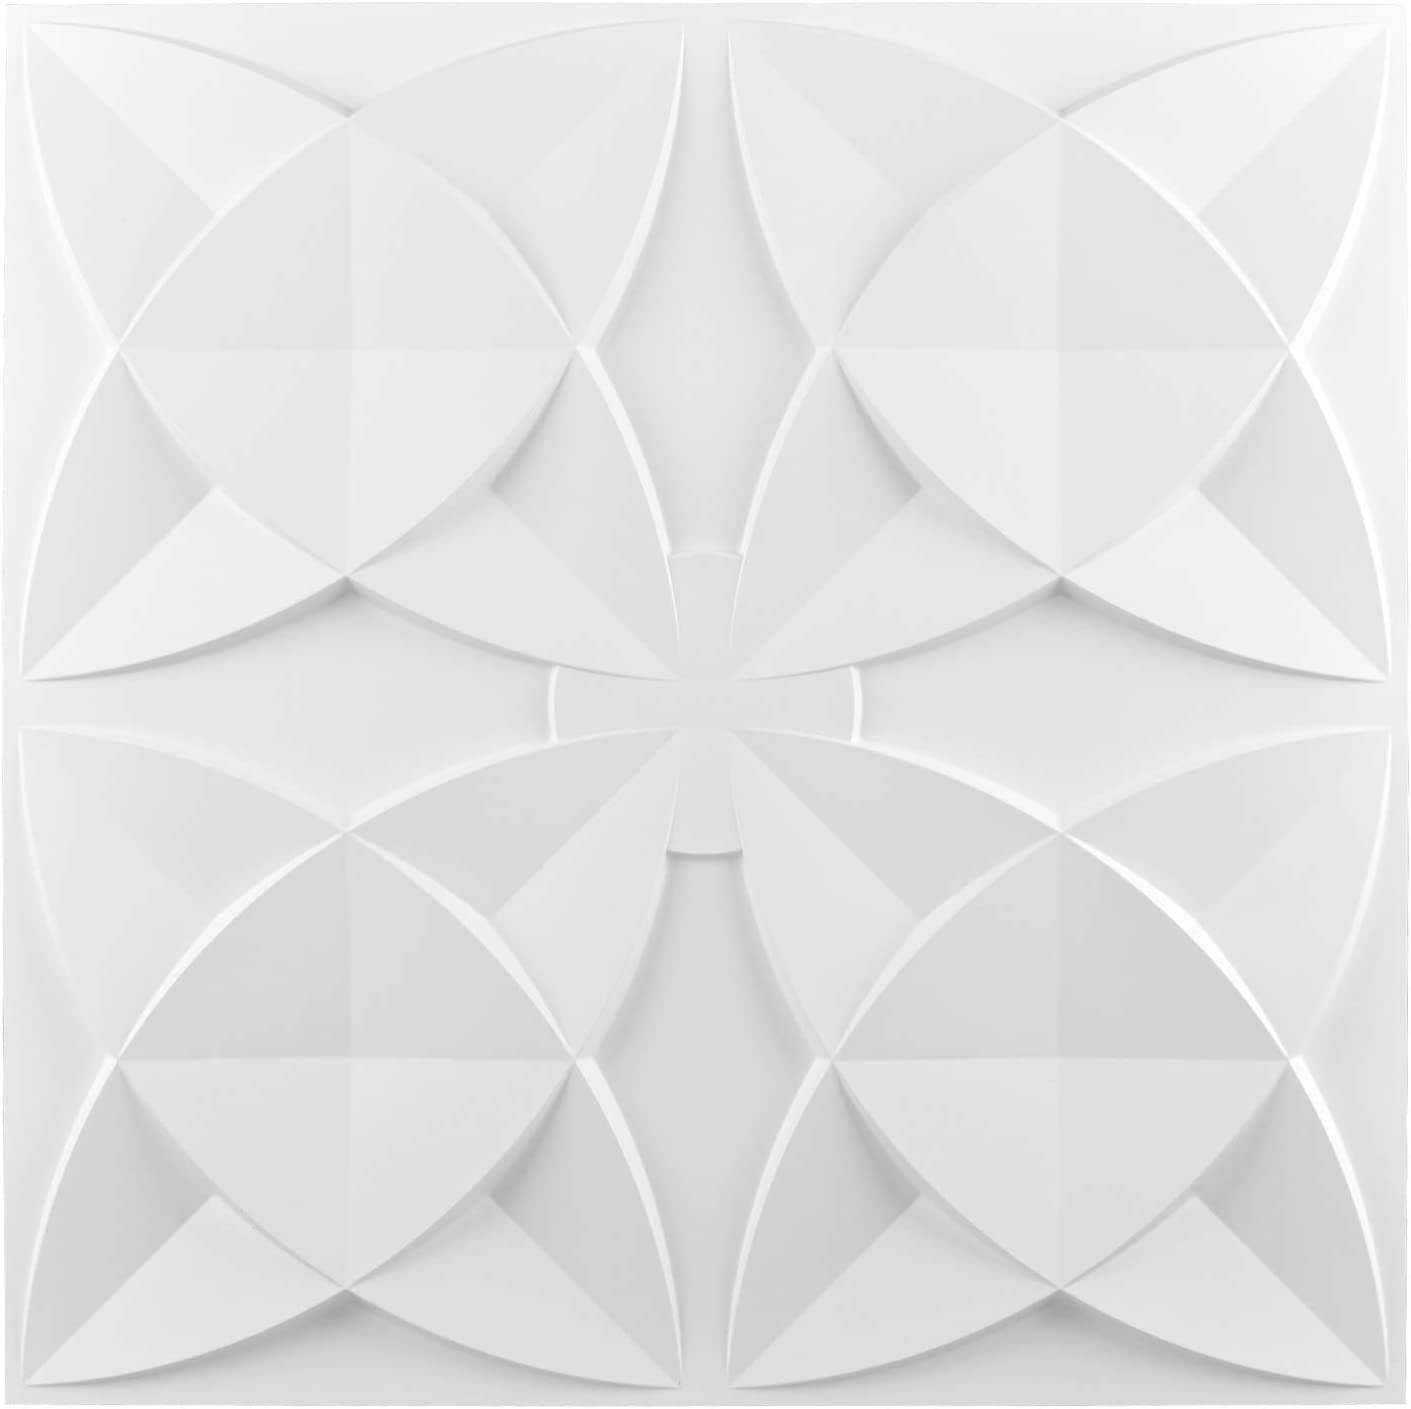 Art3d Decorative Drop Ceiling Tile 2x2 Pack of 48pcs, Glue up Ceiling Panel Square Relief in Matt White